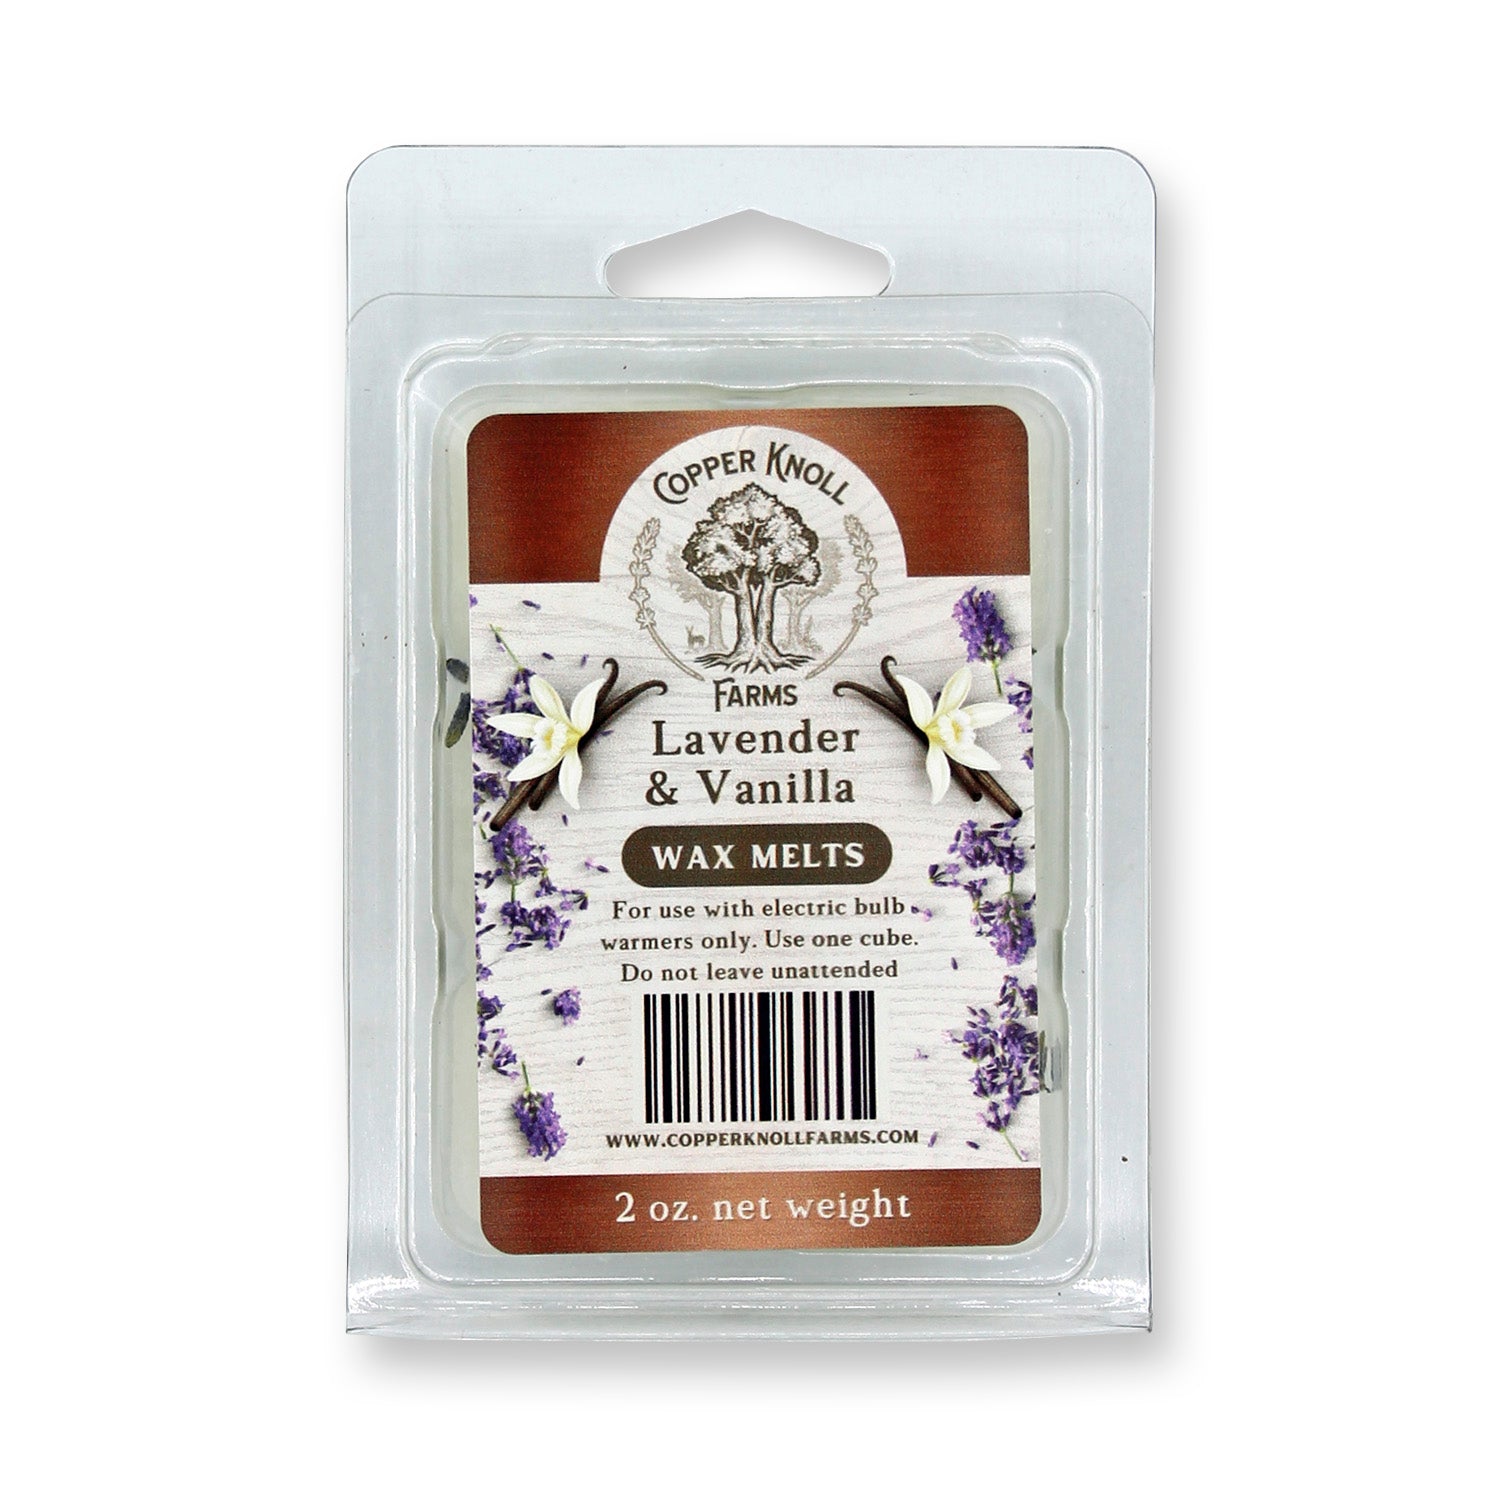 Wax Melt: Lavender Vanilla